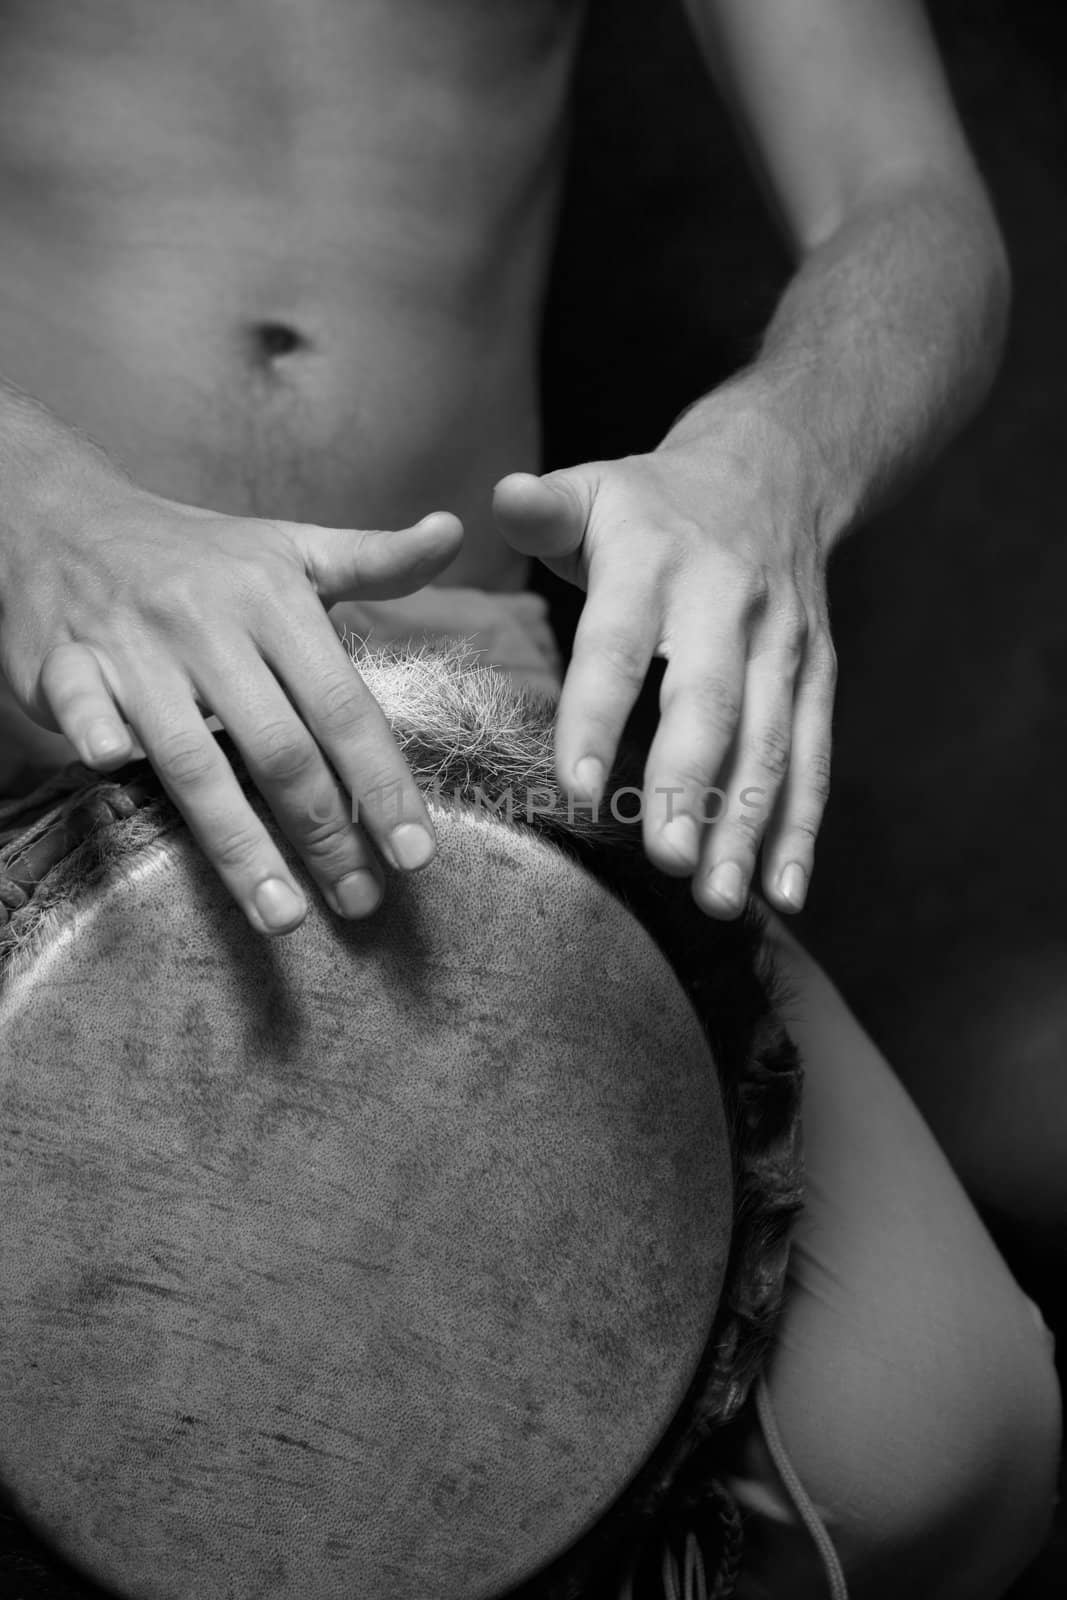 Man playing the djembe (nigerian drum) in studio